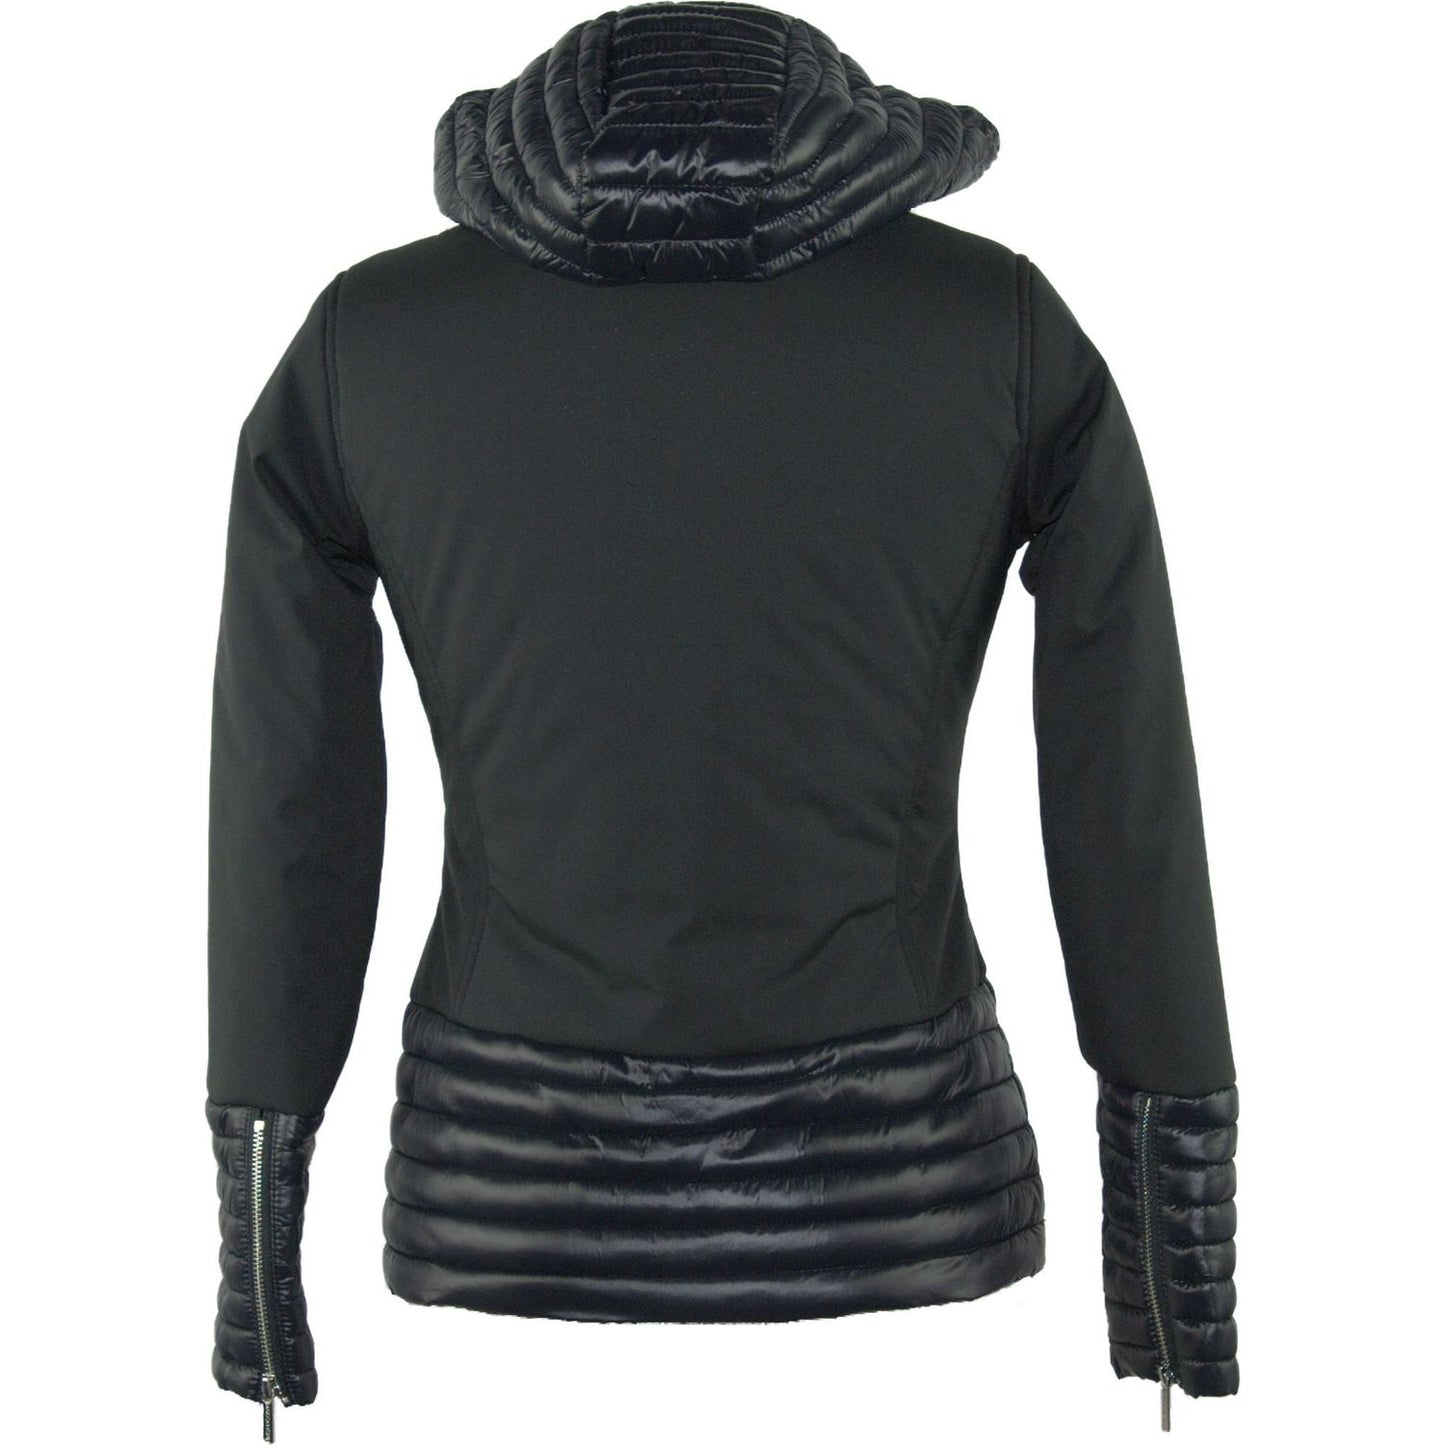 Maison Espin Chic Black Down Jacket Outerwear Piece WOMAN COATS & JACKETS black-polyester-jackets-coat-2 stock_product_image_1651_273702056-efa66812-2b7.jpg